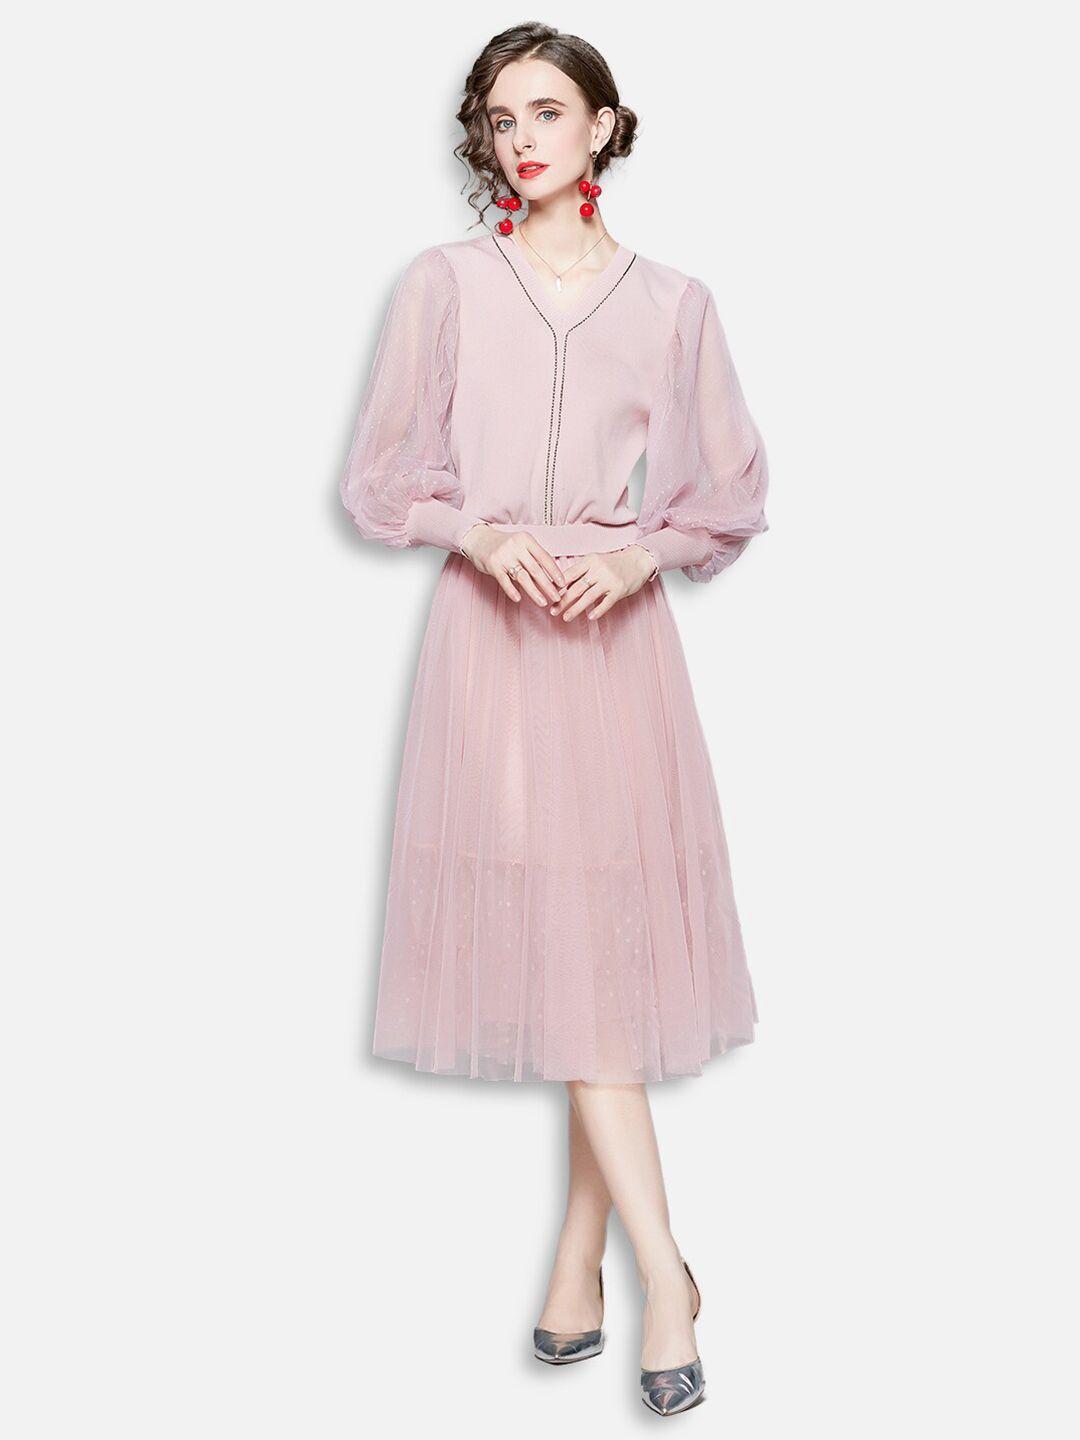 jc collection pink midi dress